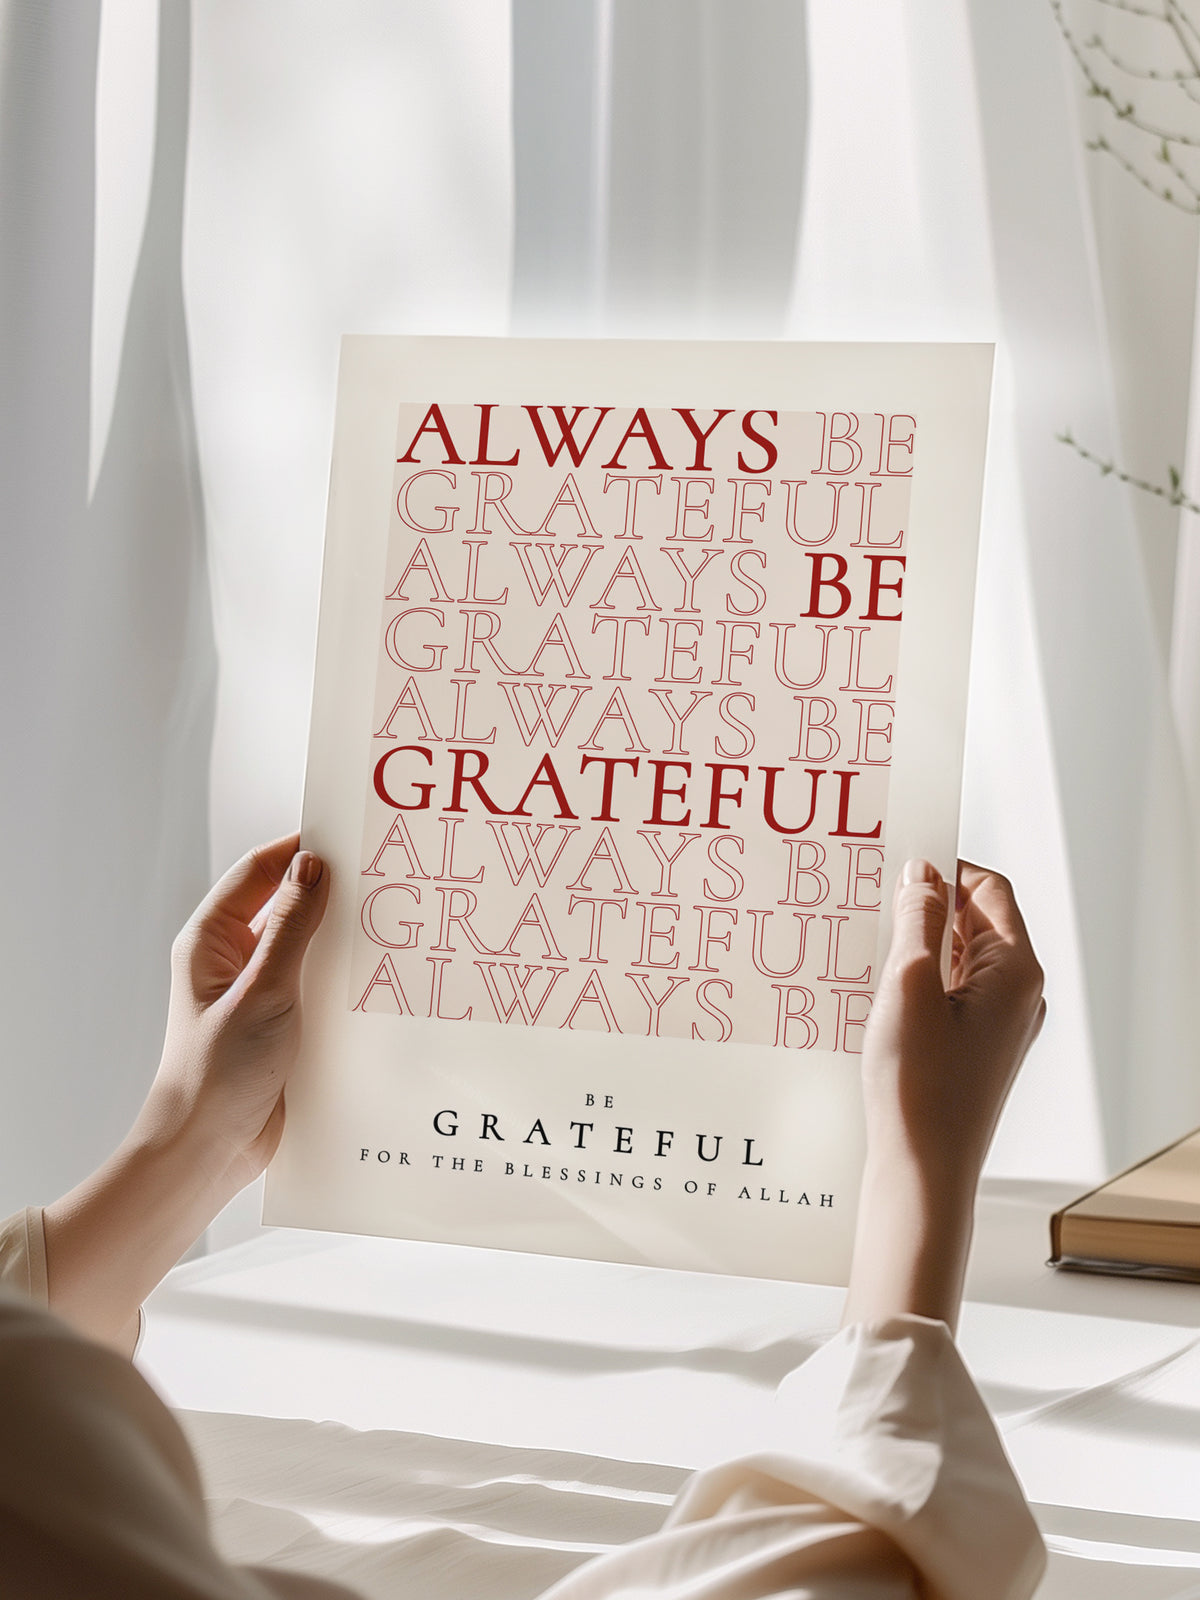 Always Be Grateful Poster